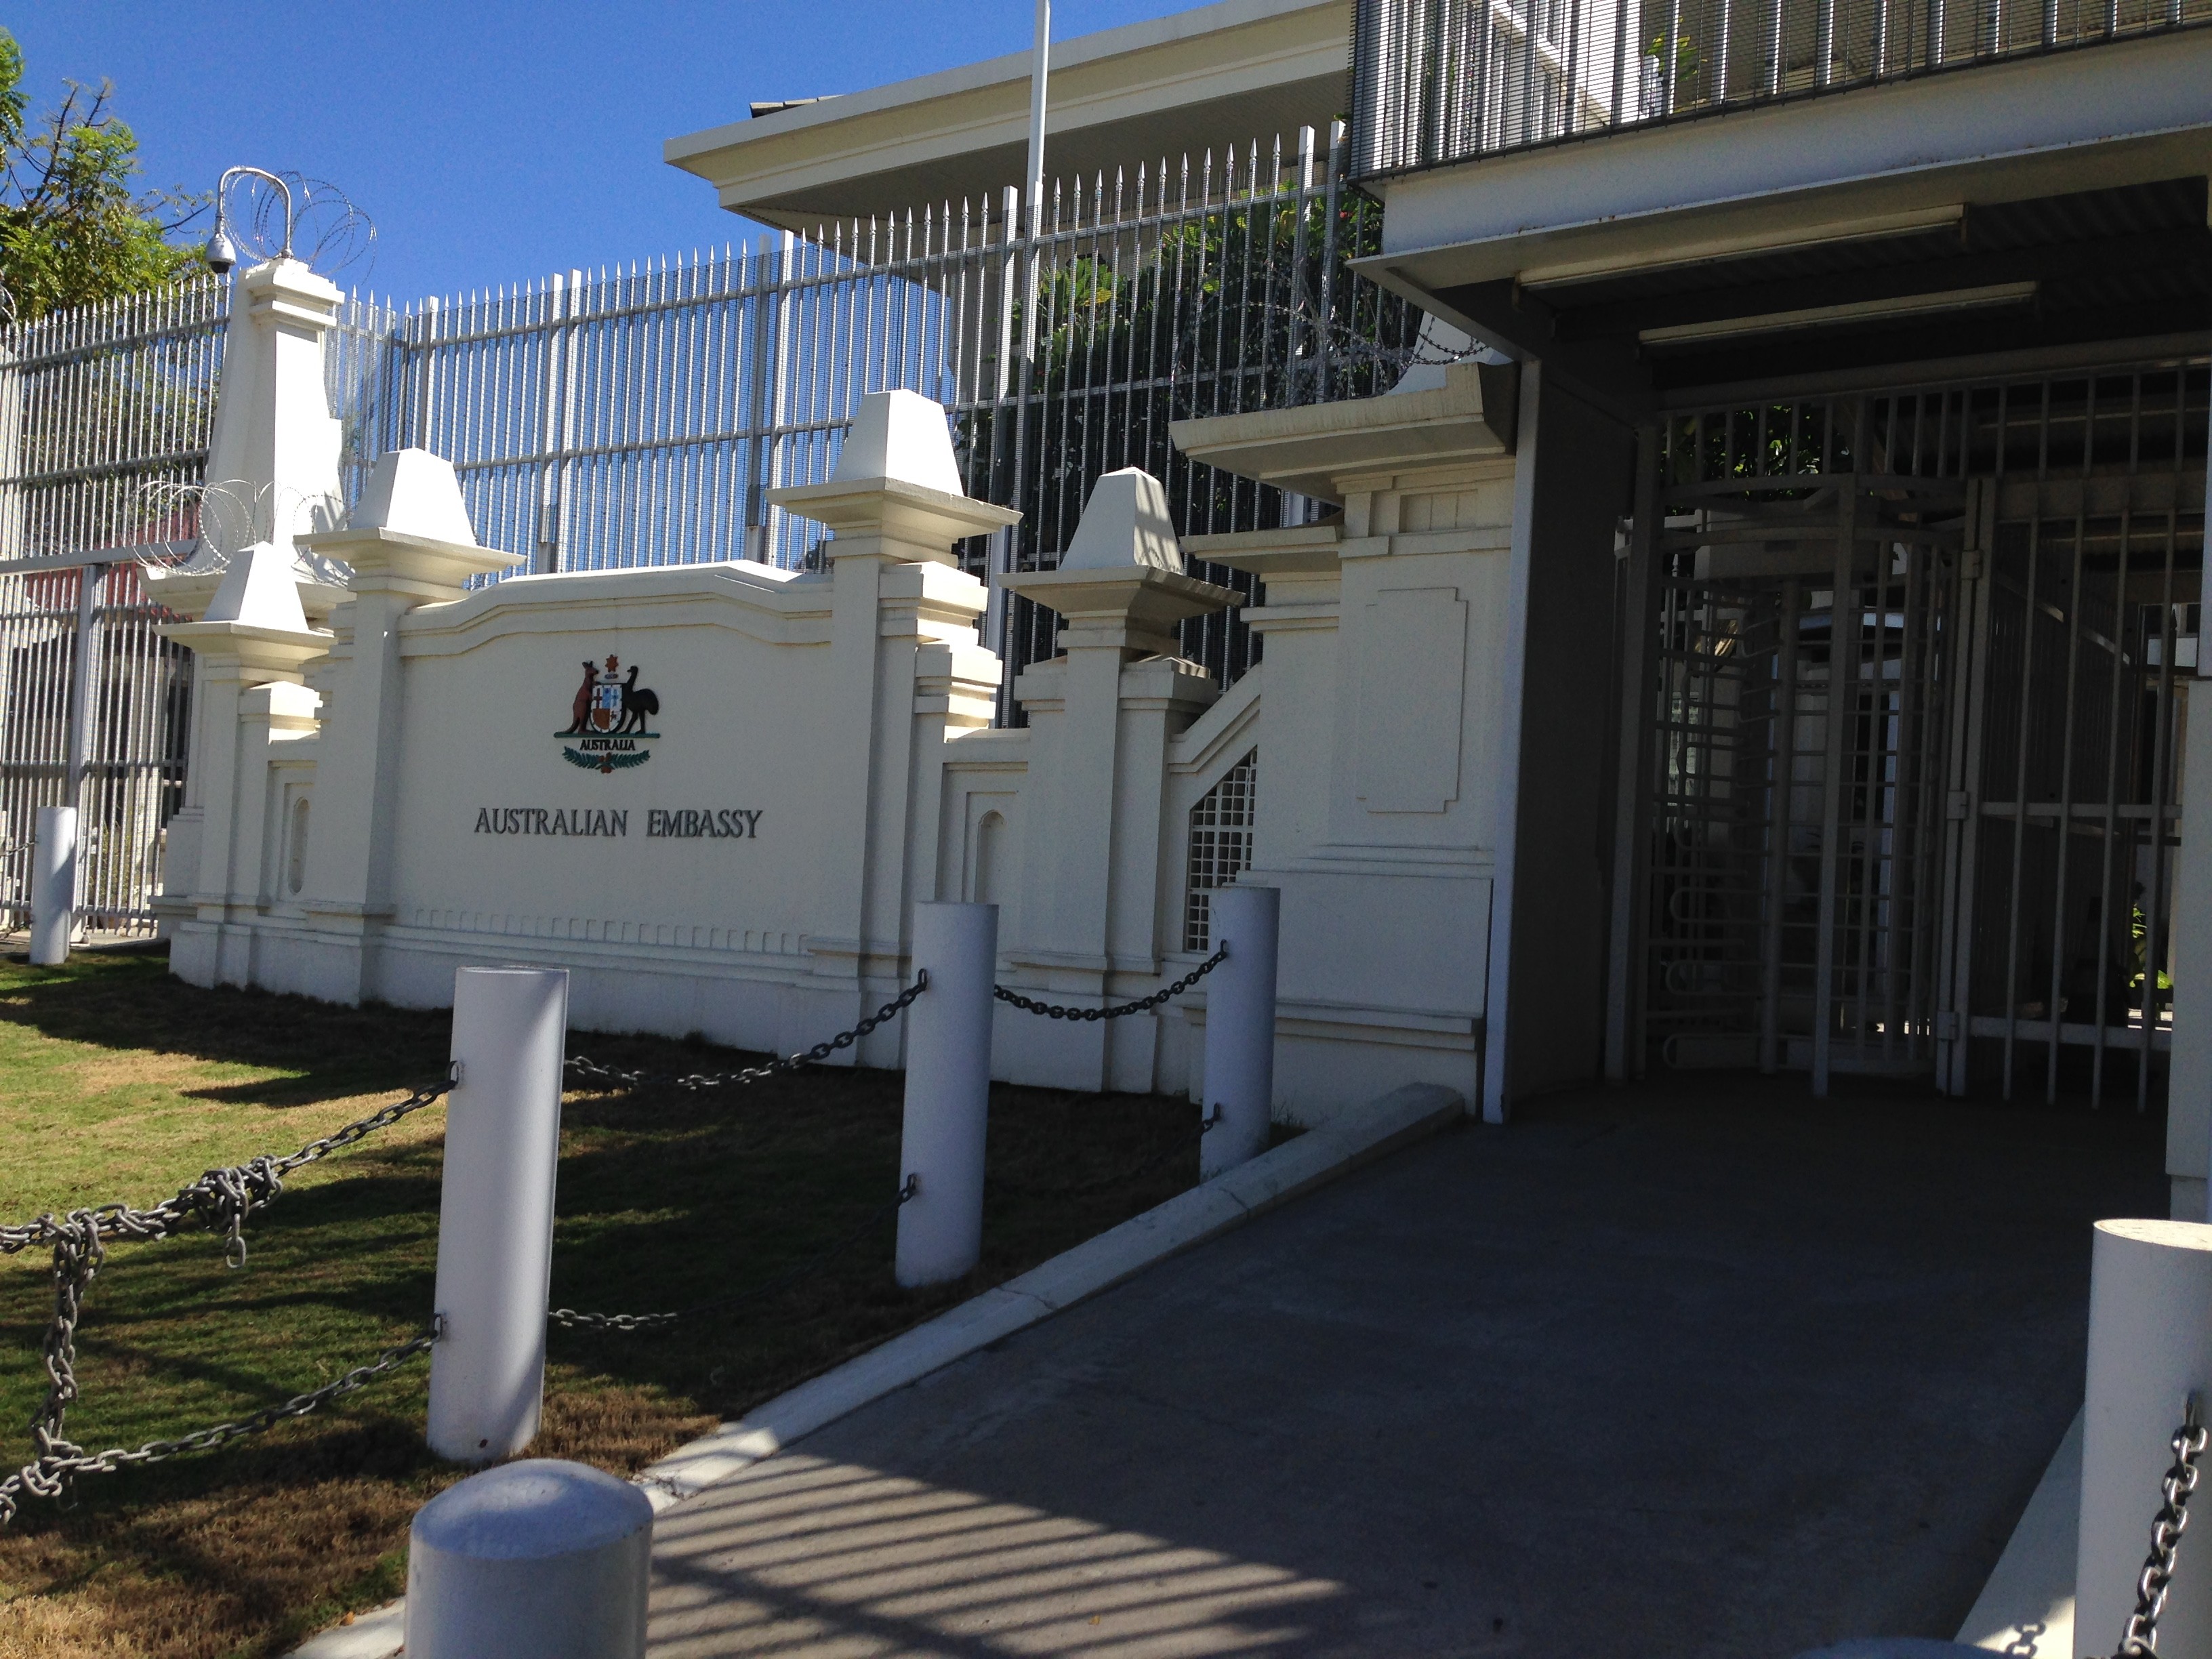 The Australian Embassy in Dili